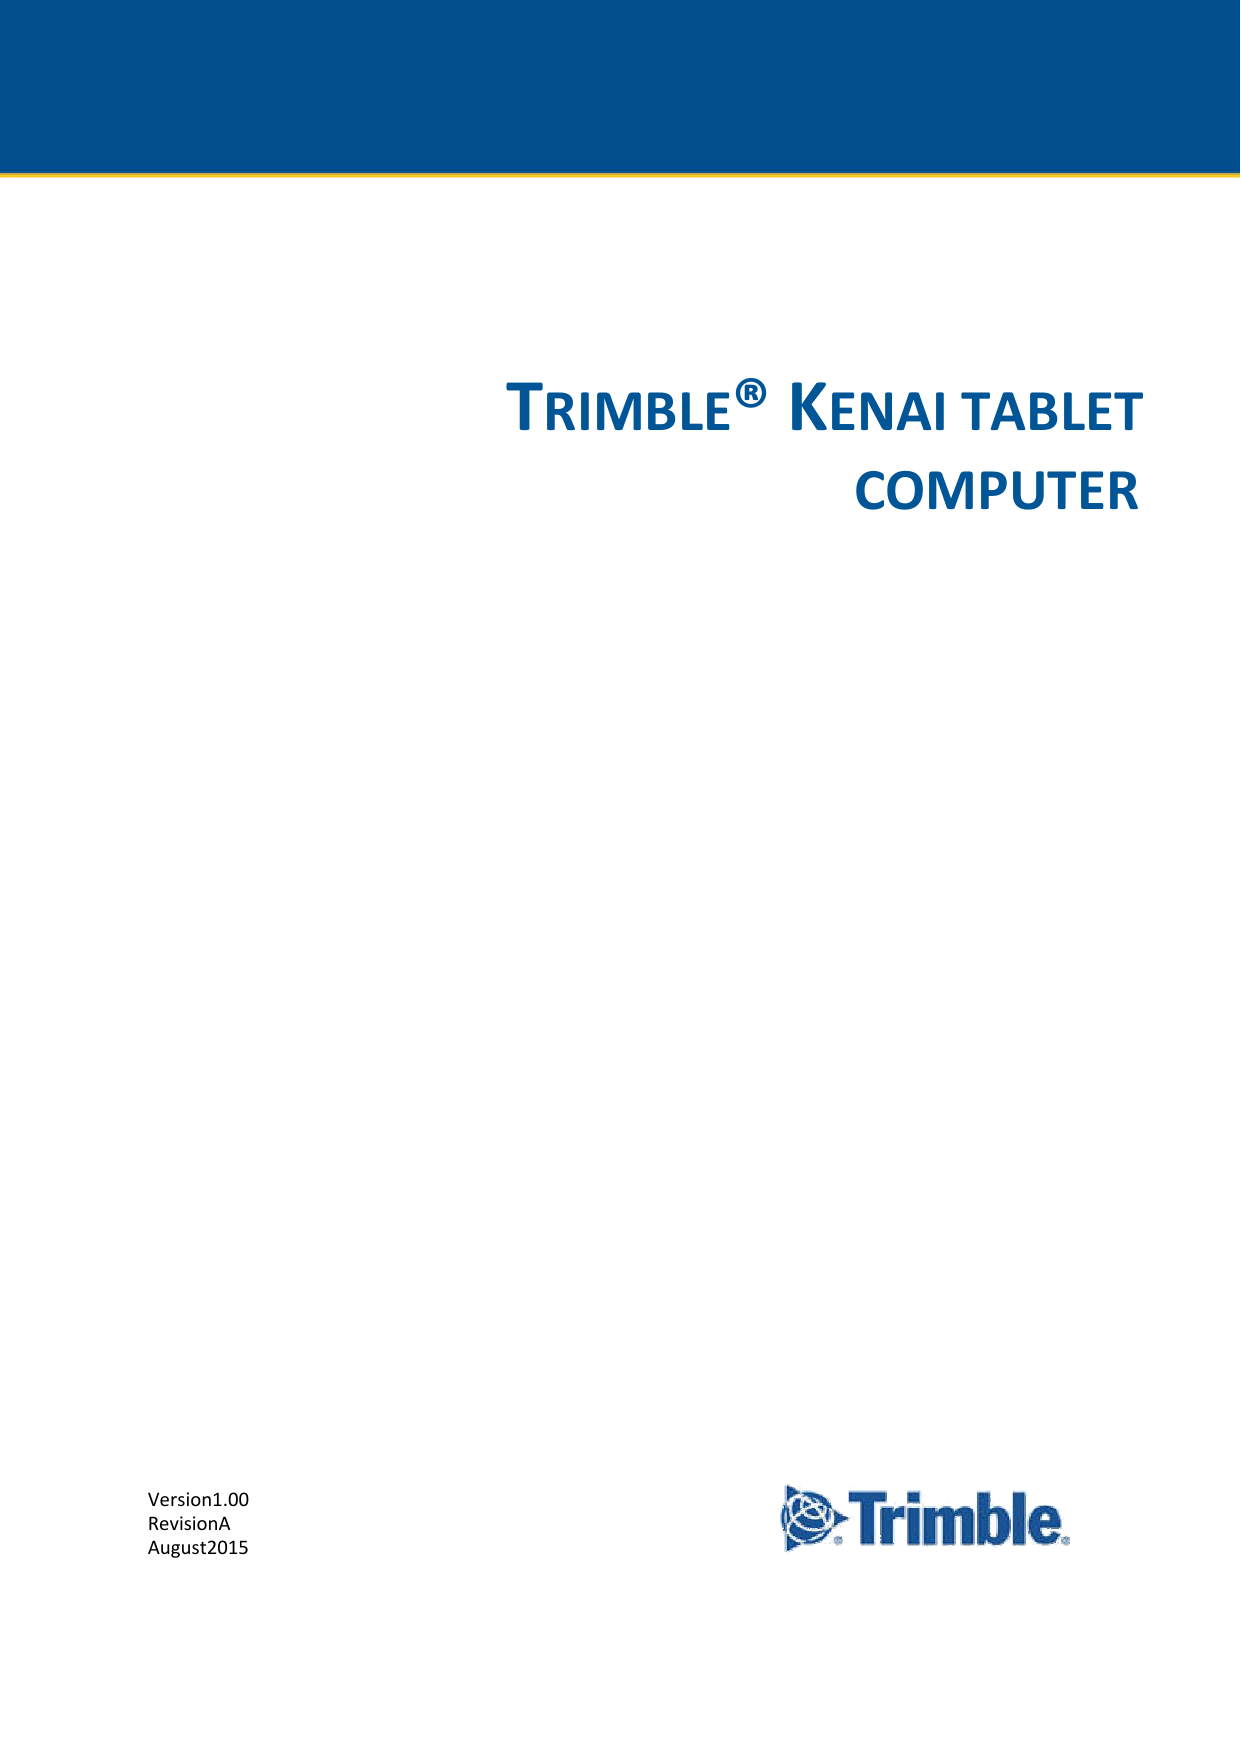 USERGUIDE          TRIMBLE®KENAITABLET  COMPUTER                                               Version1.00 RevisionA August2015 